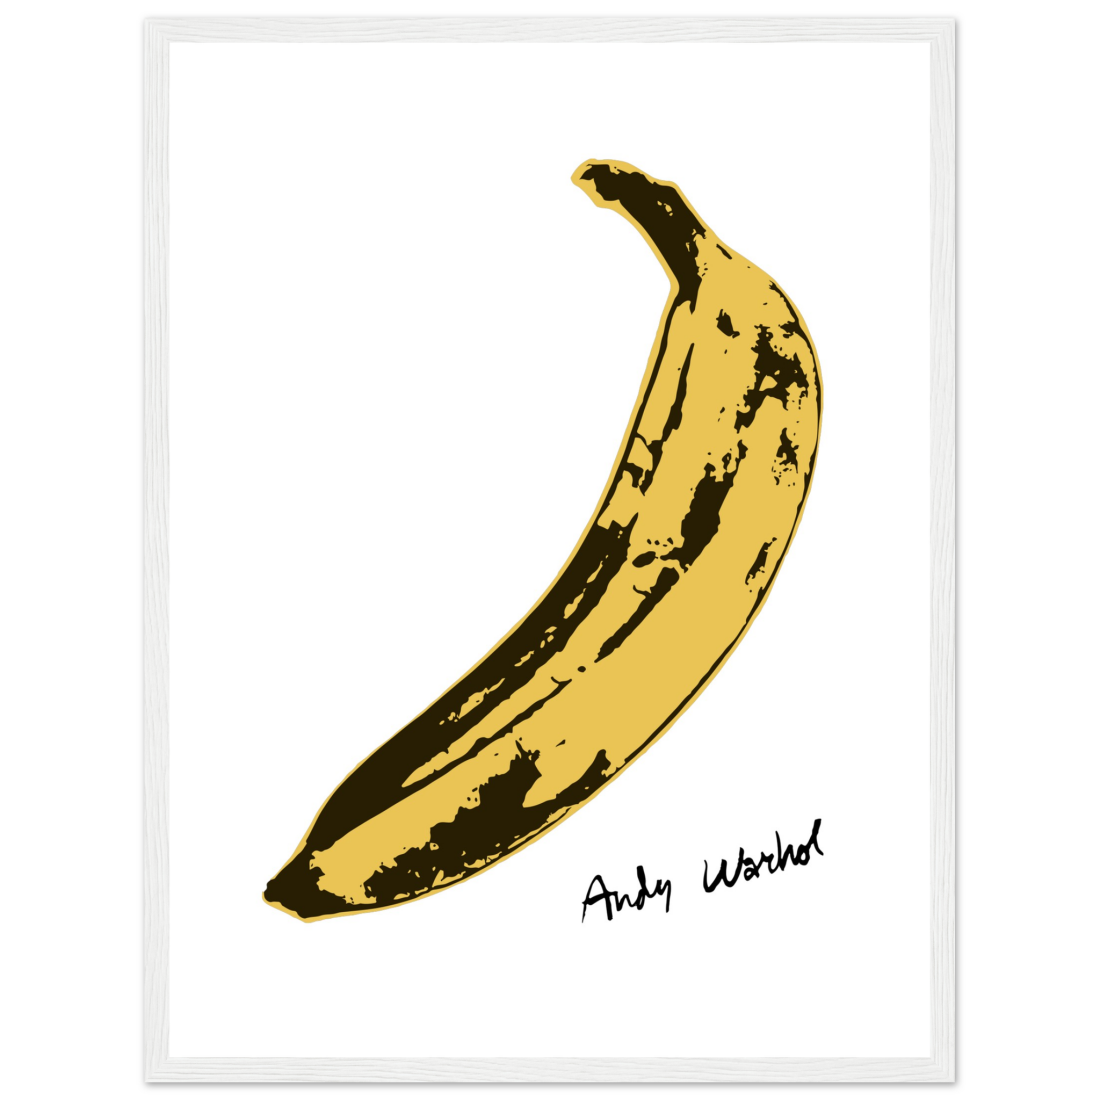 Andy Warhol's Banana, 1967 Pop Art Poster-15